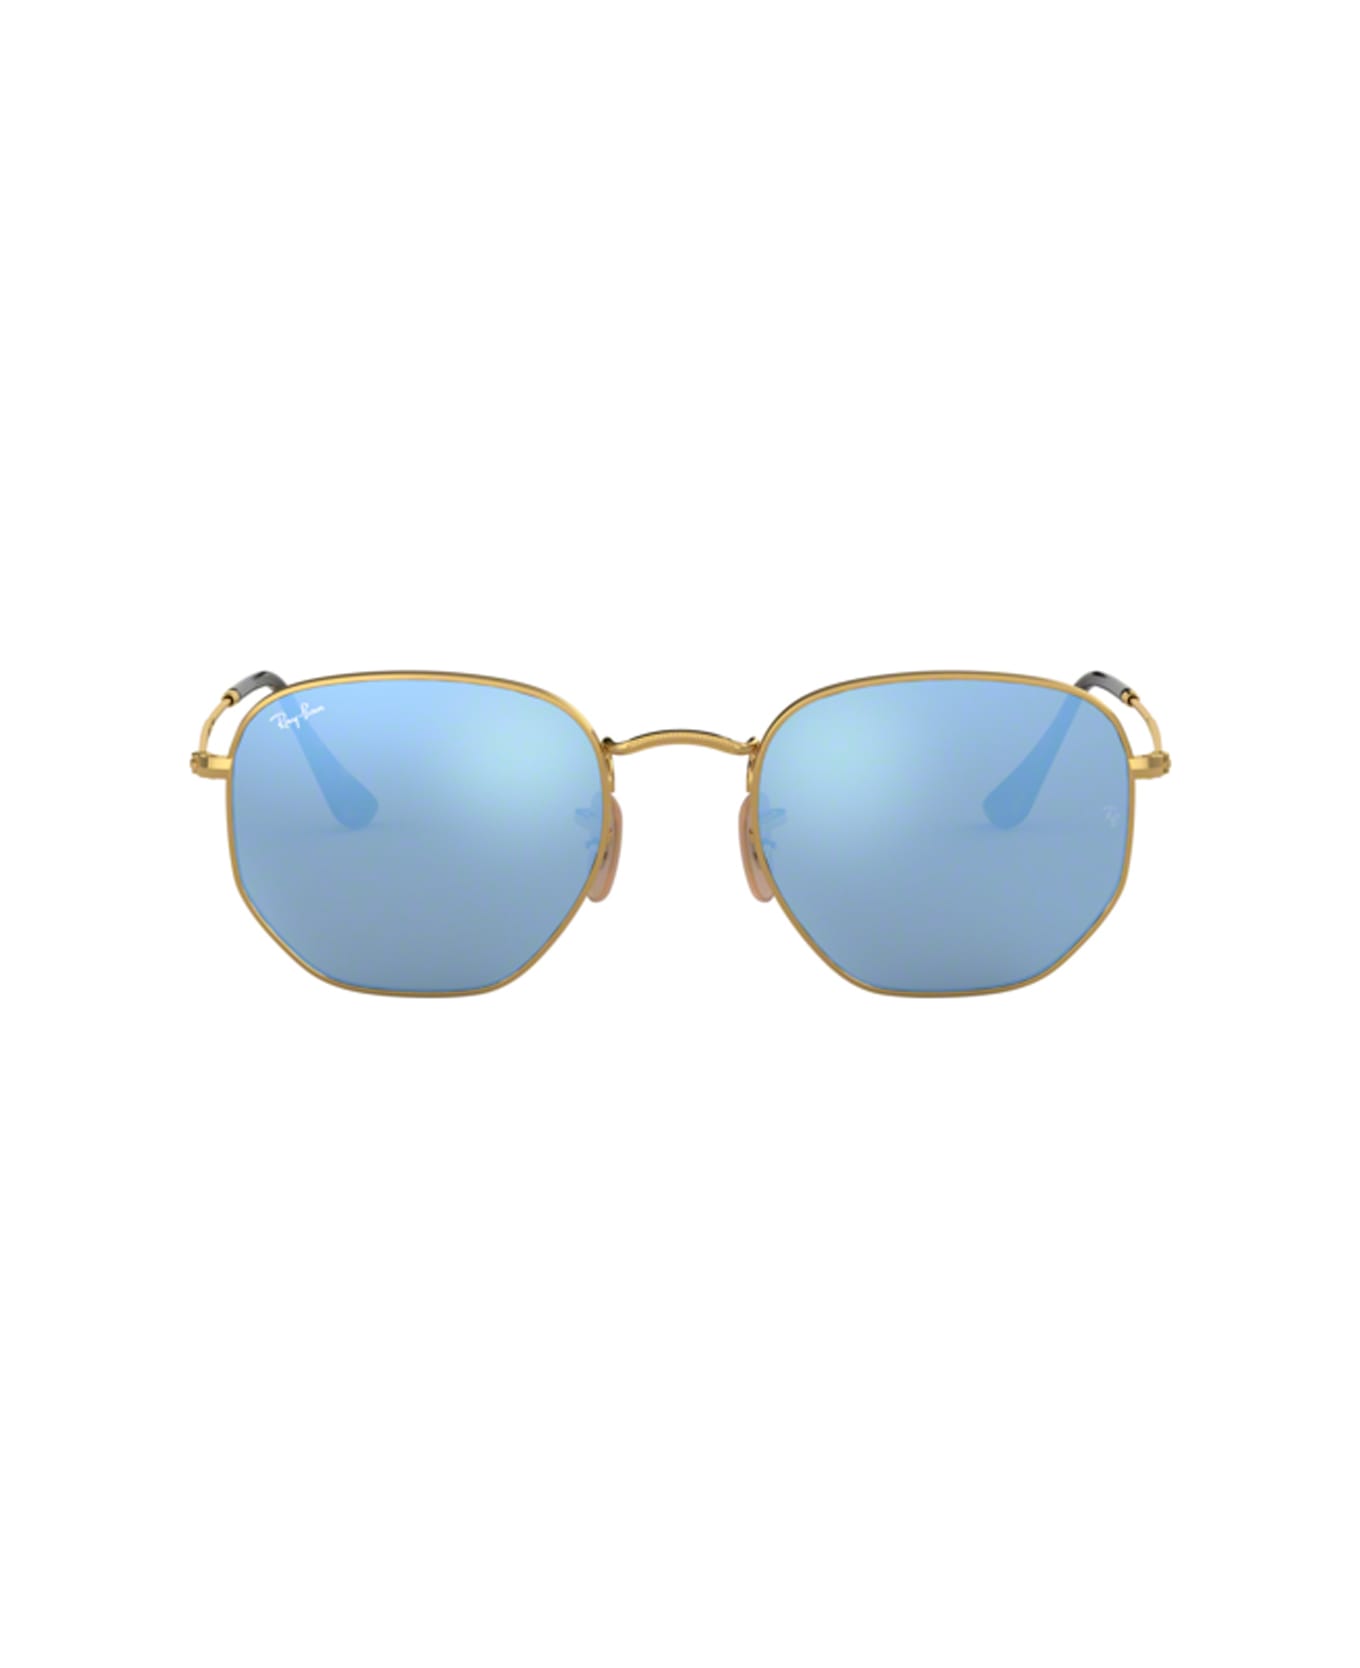 Ray-Ban Rb3548 001/9o Sunglasses - Oro サングラス